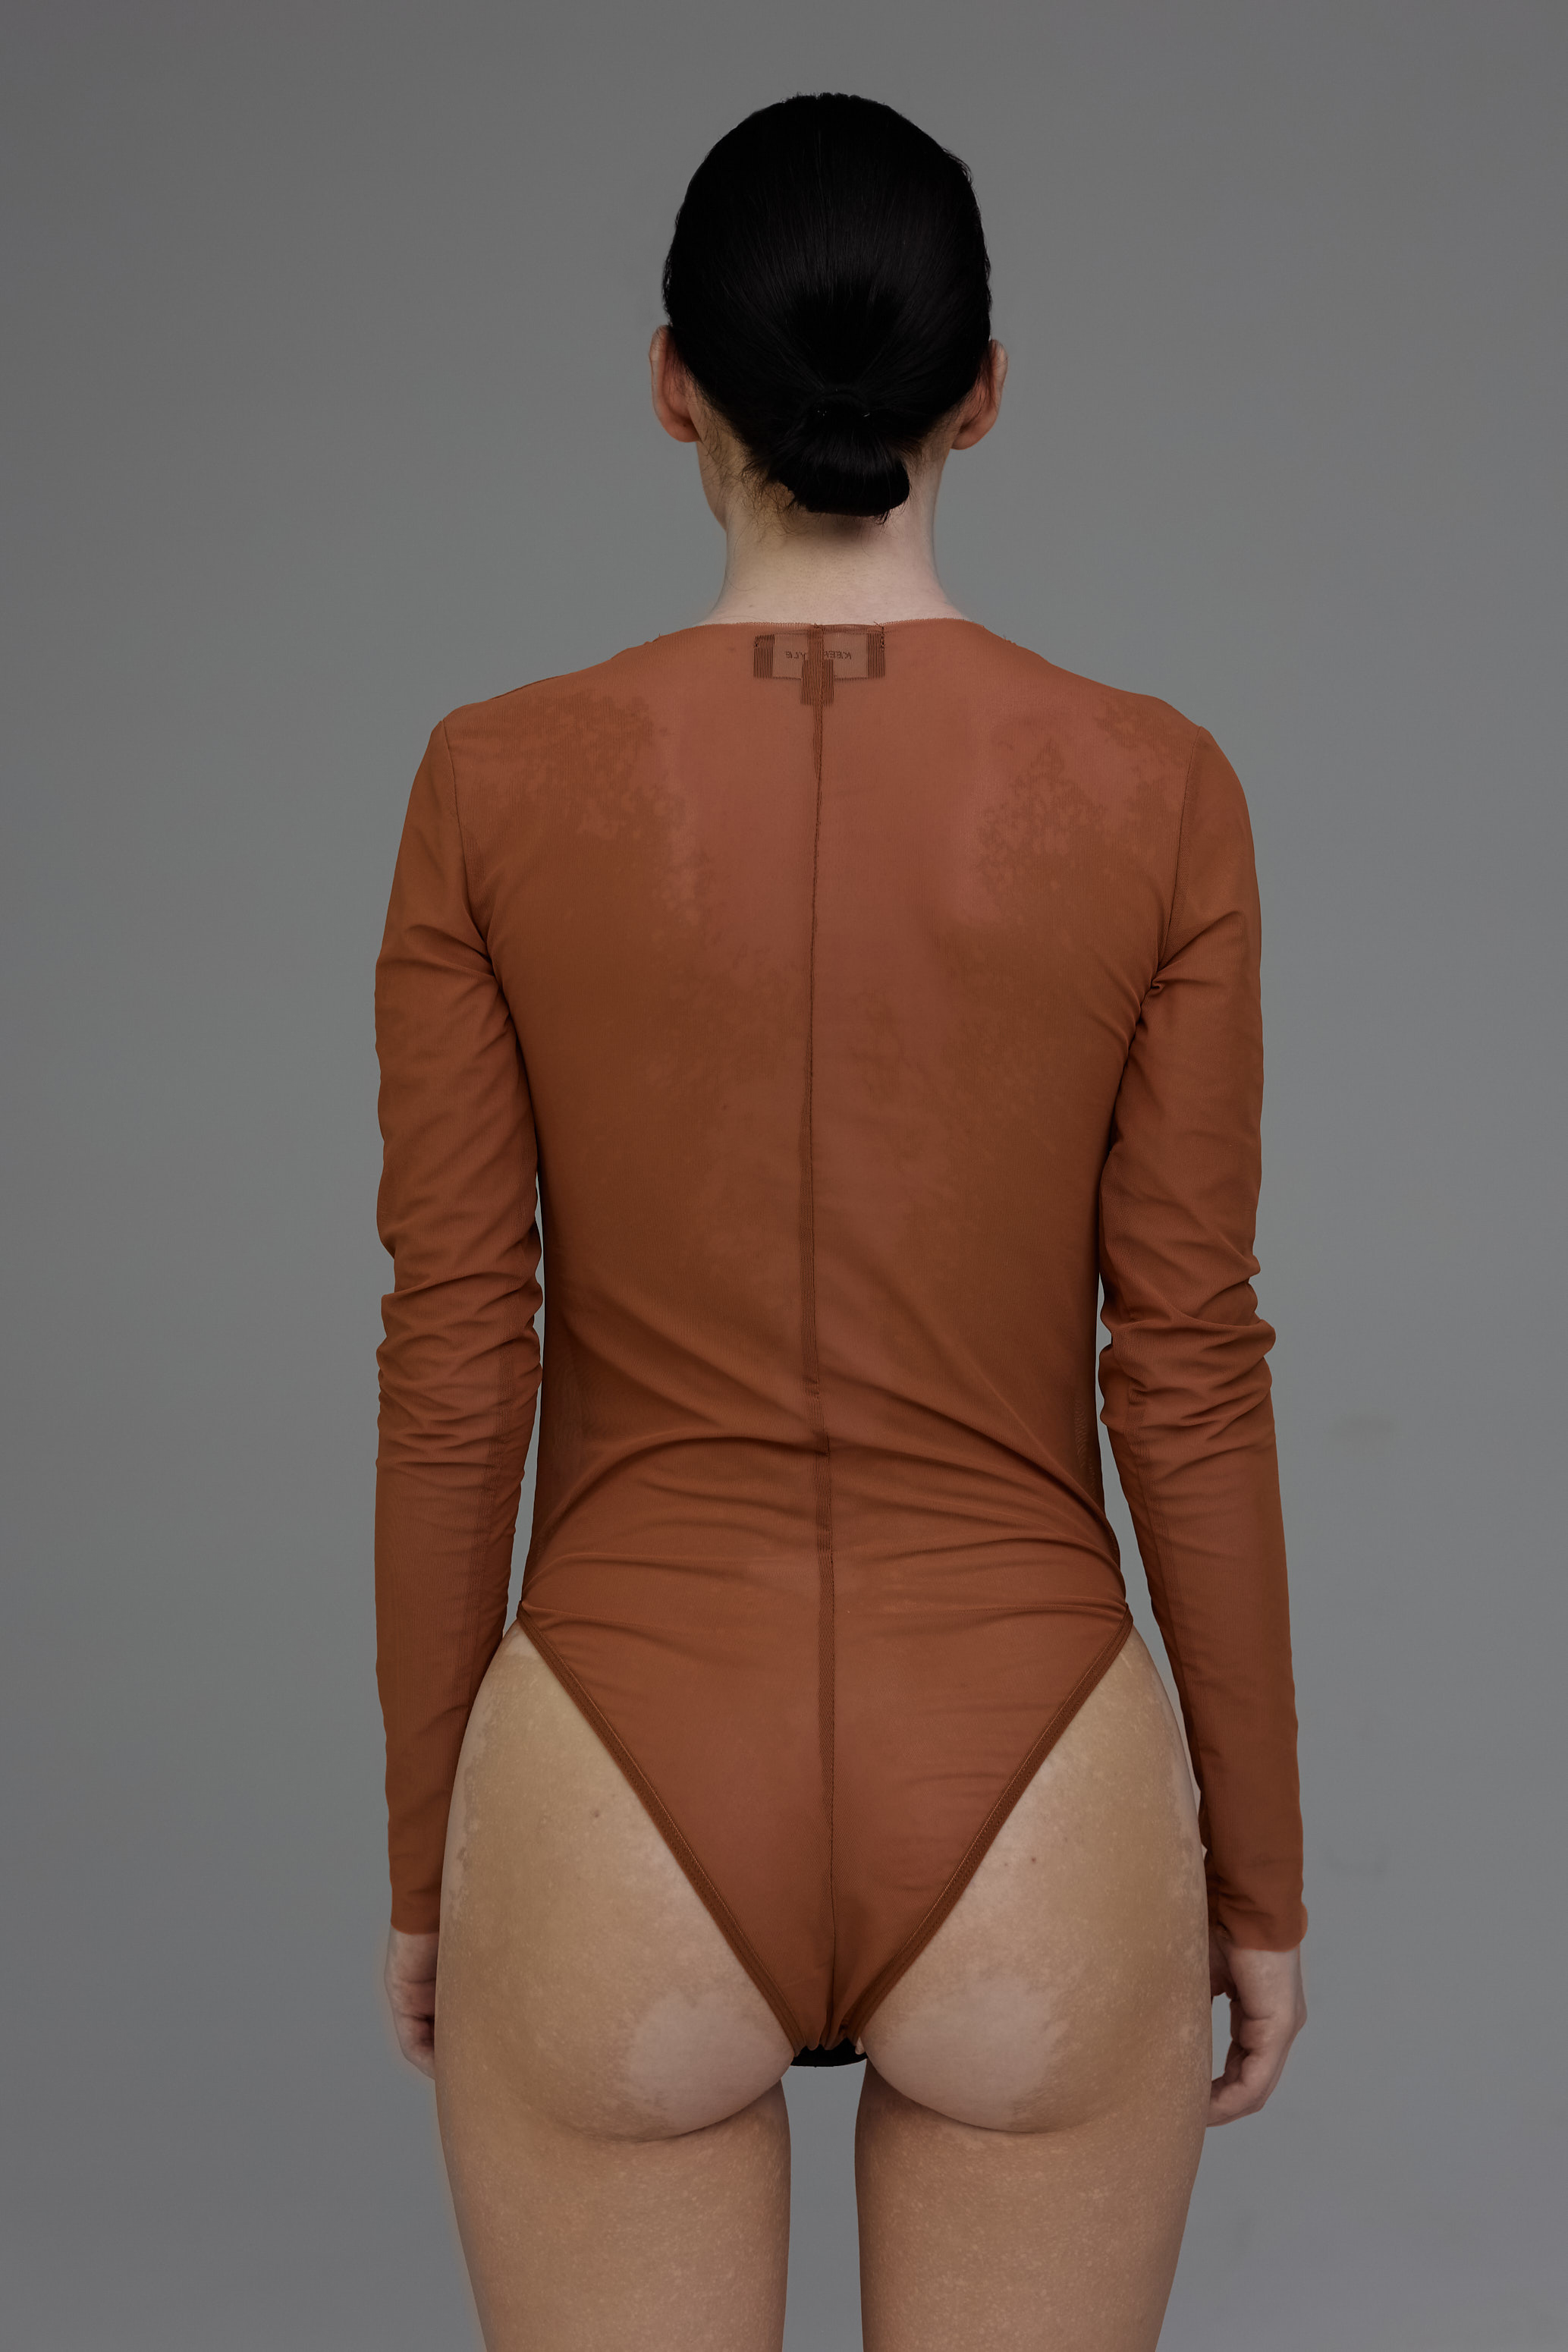 mesh bodysuit in brown color